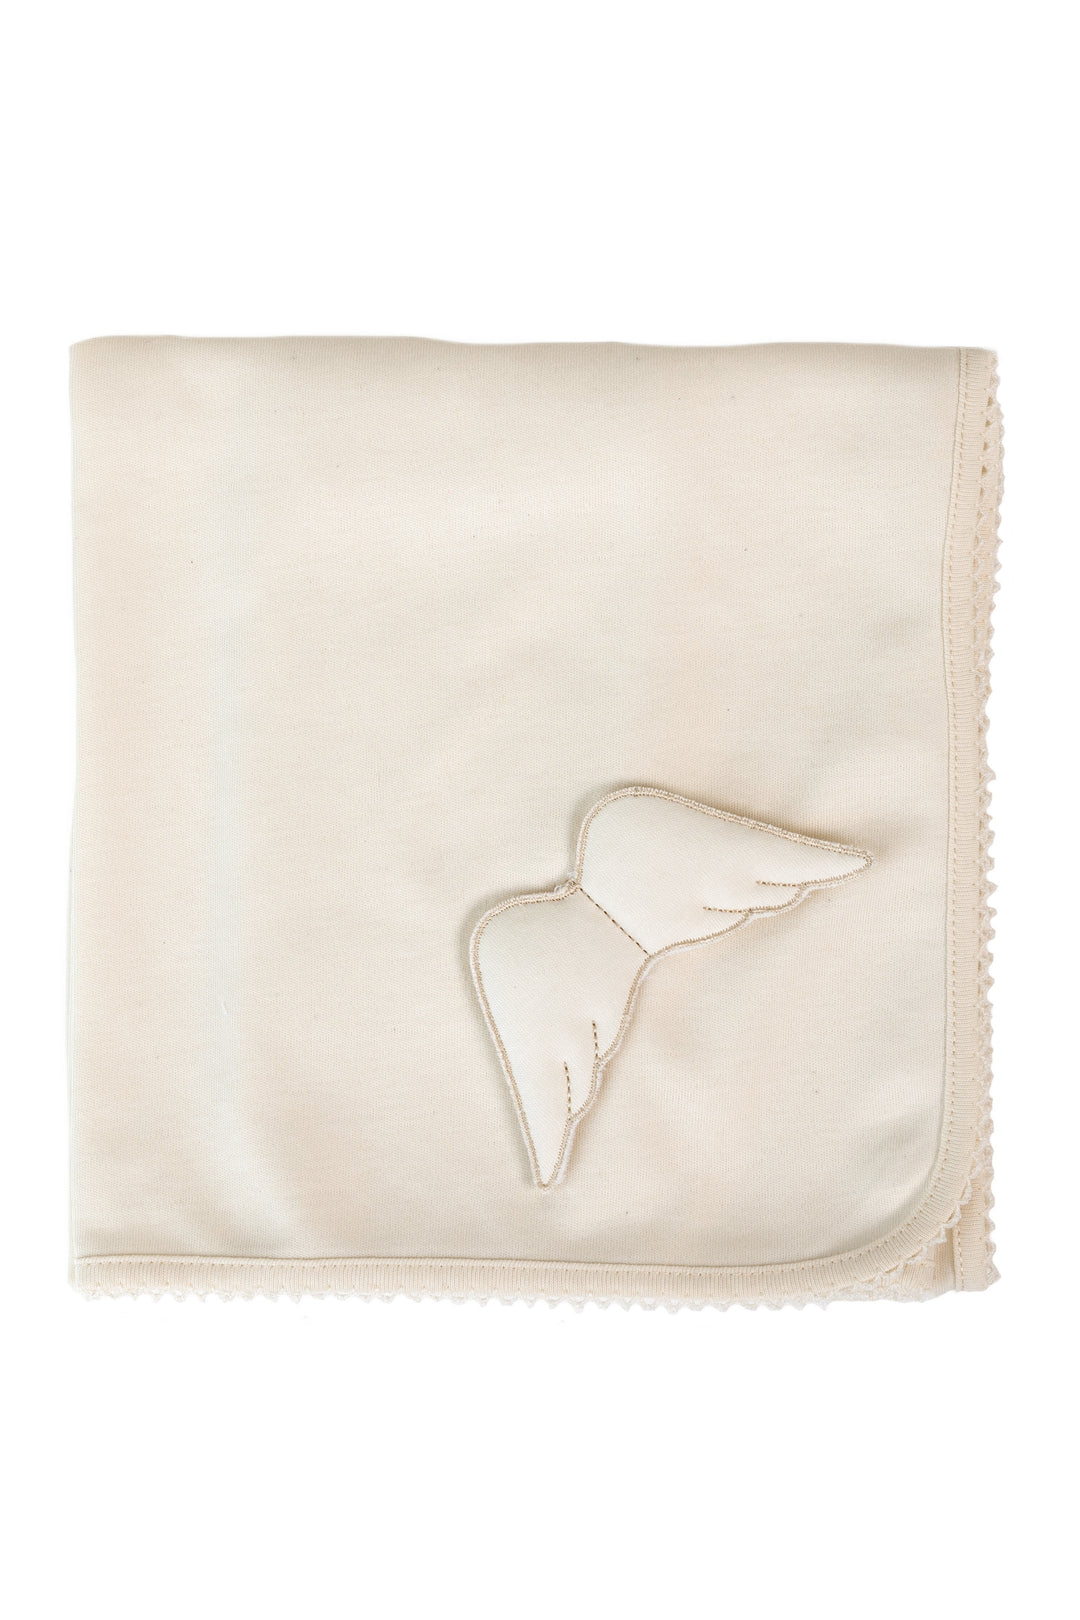 Angel Wing Cotton Blanket